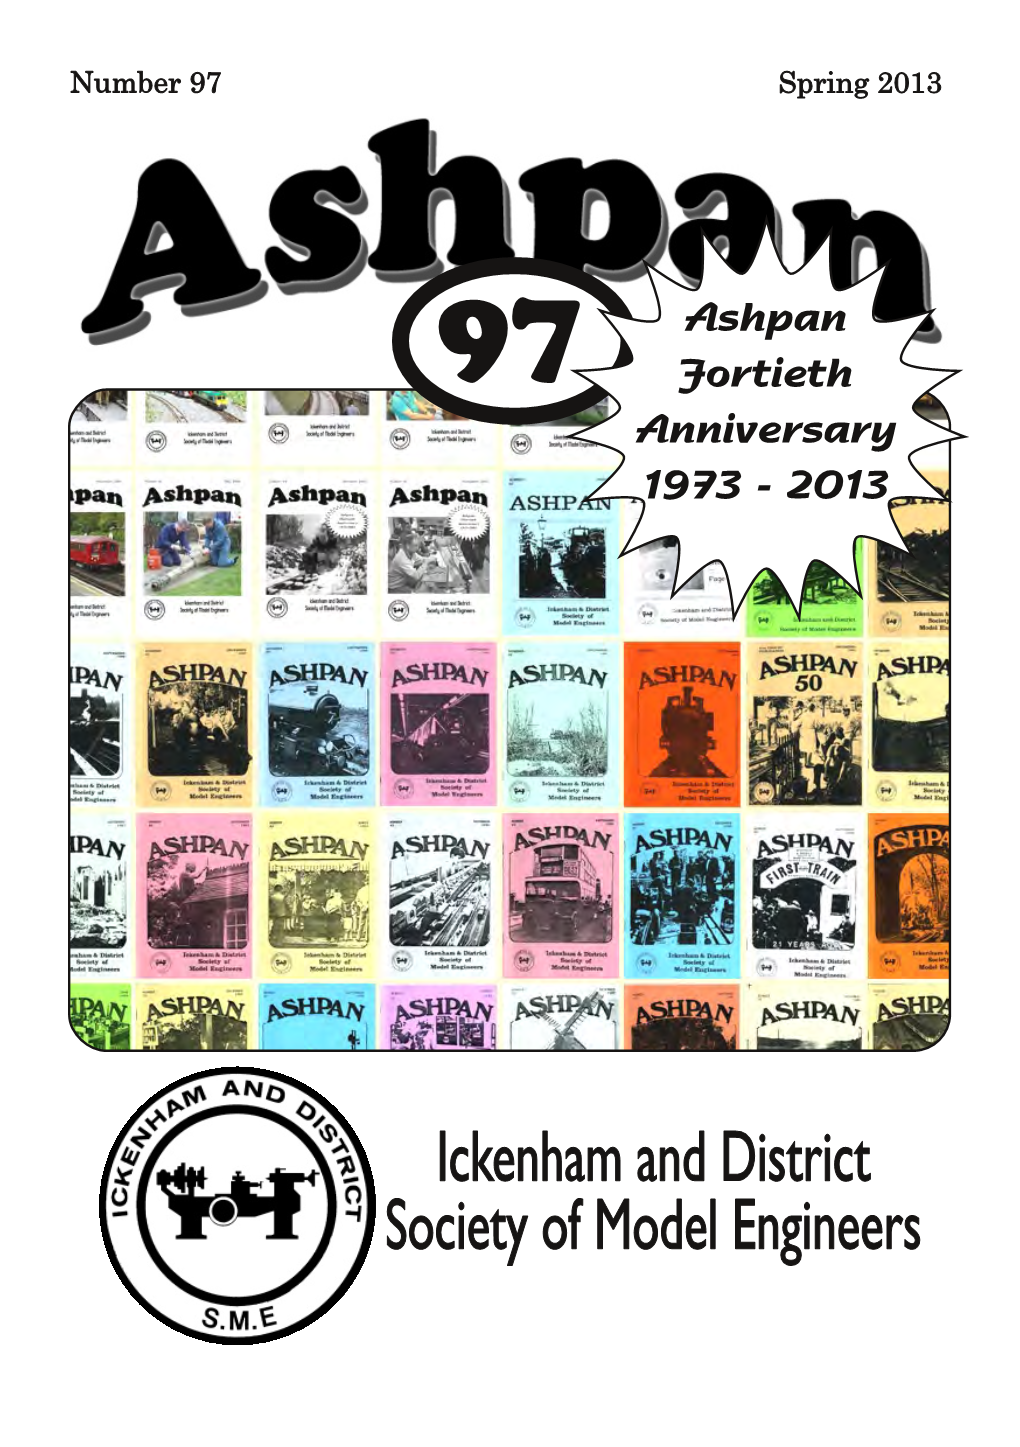 Ashpan 97 Fortieth Anniversary 1973 - 2013